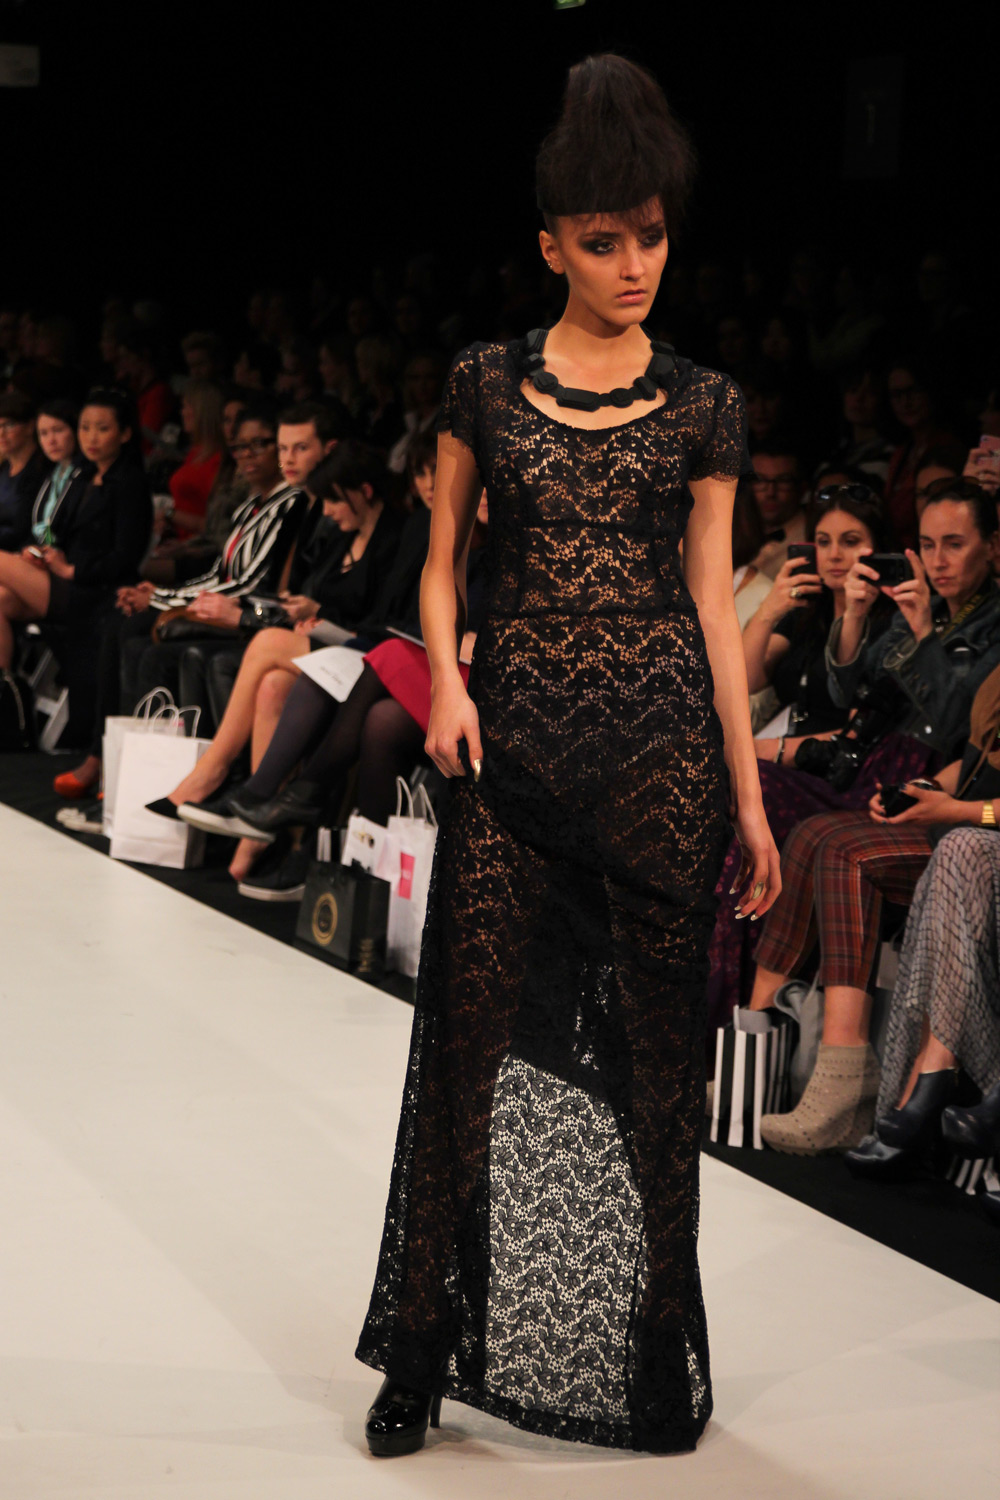 NZFW 2012: ANDREA MOORE - FOUREYES | New Zealand Street Style Fashion Blog